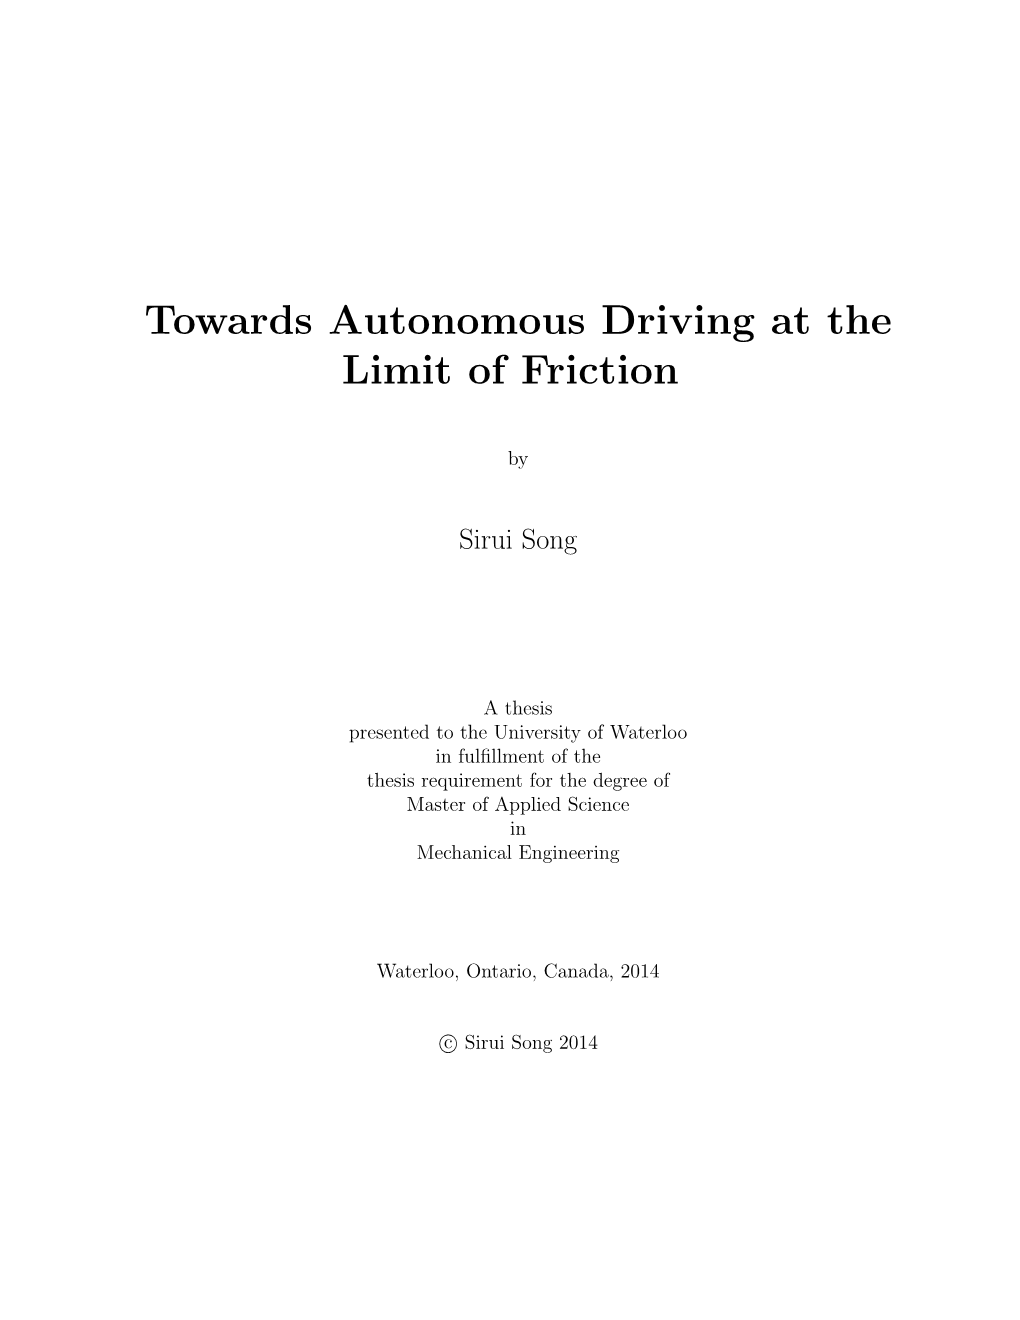 Towards Autonomous Driving at the Limit of Friction